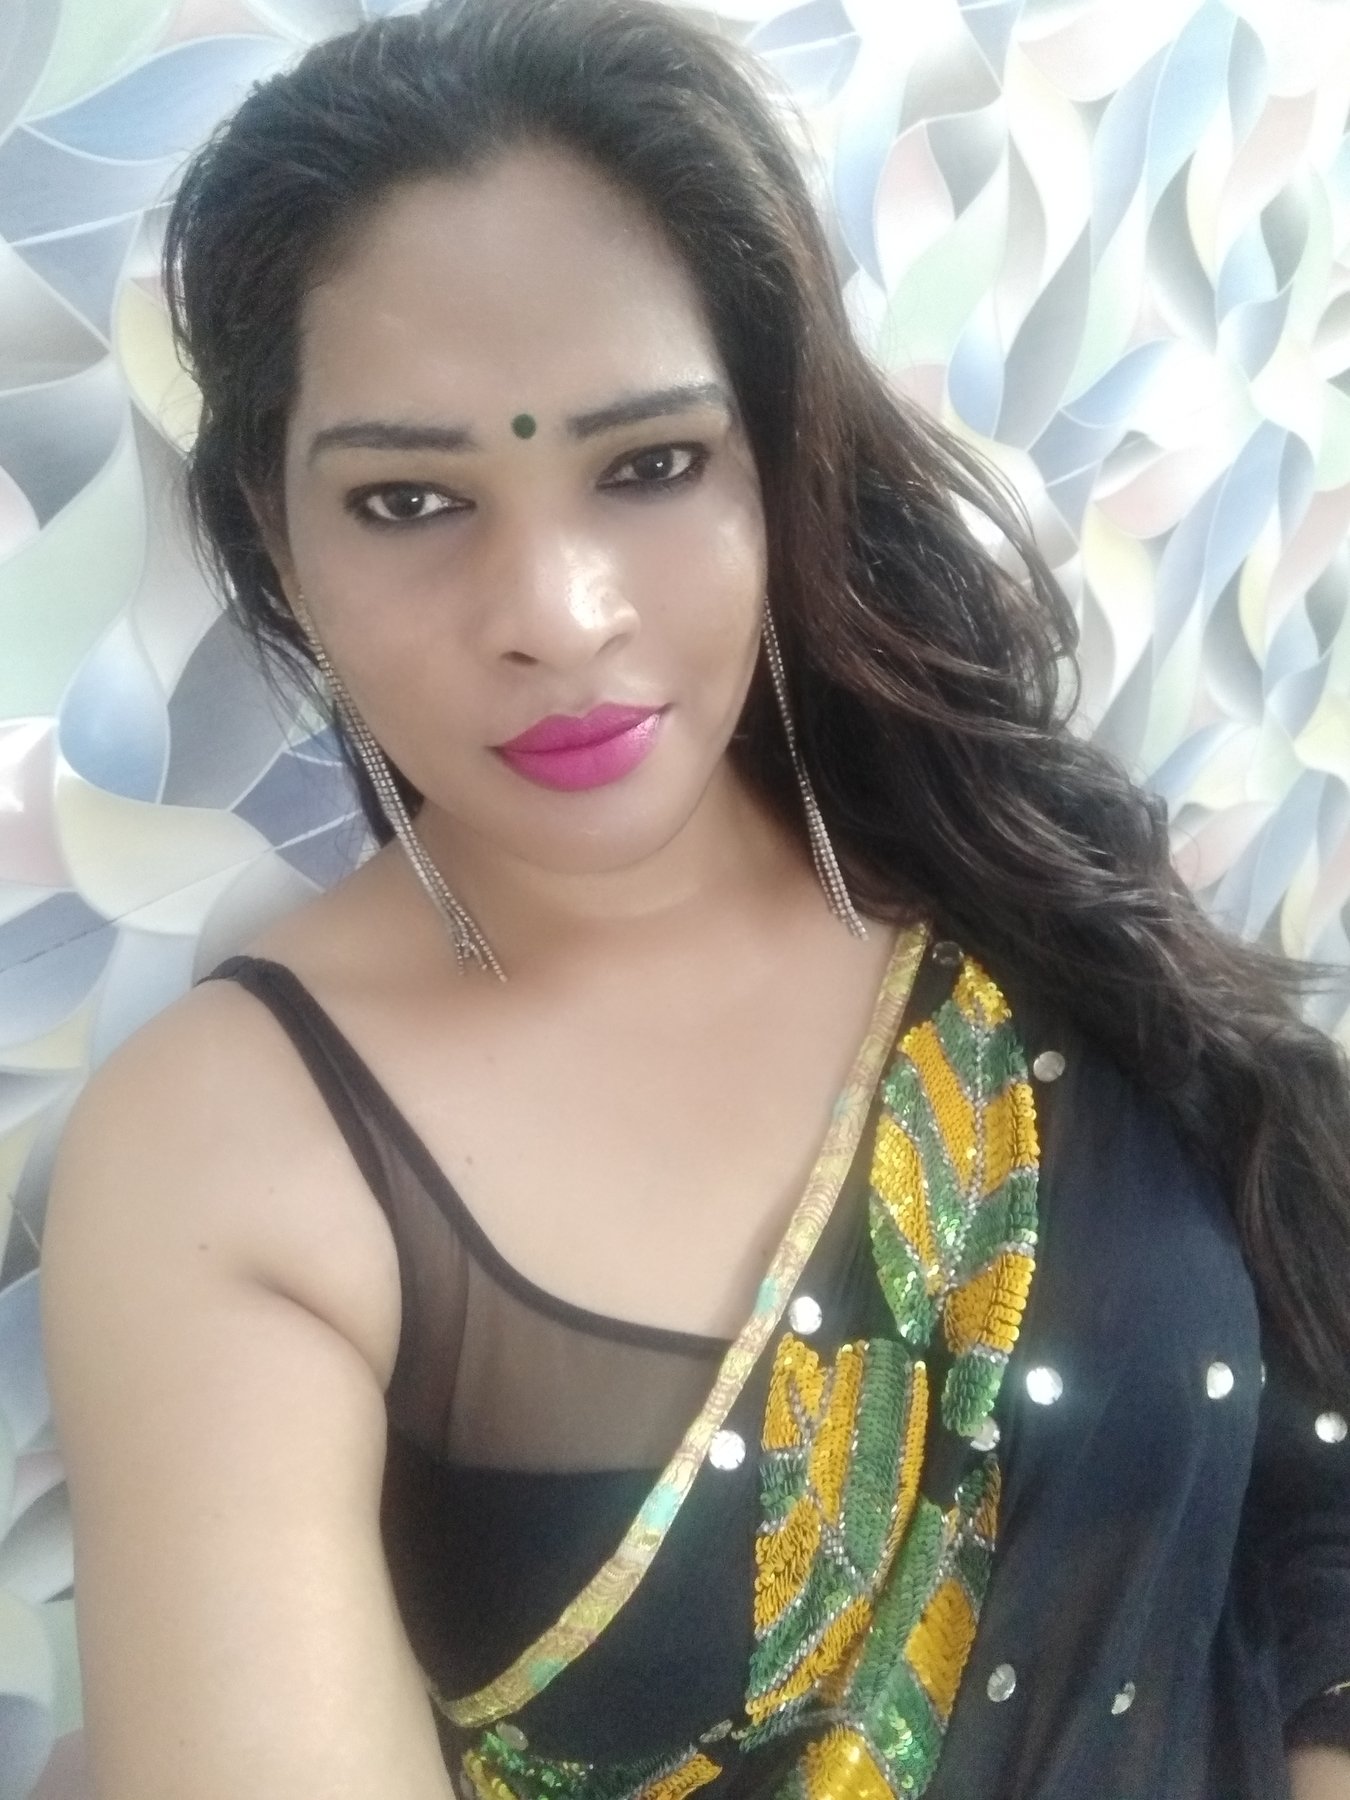 Indian Transexual Blowjobs - Anjali Trans, Indian Transsexual escort in Mumbai